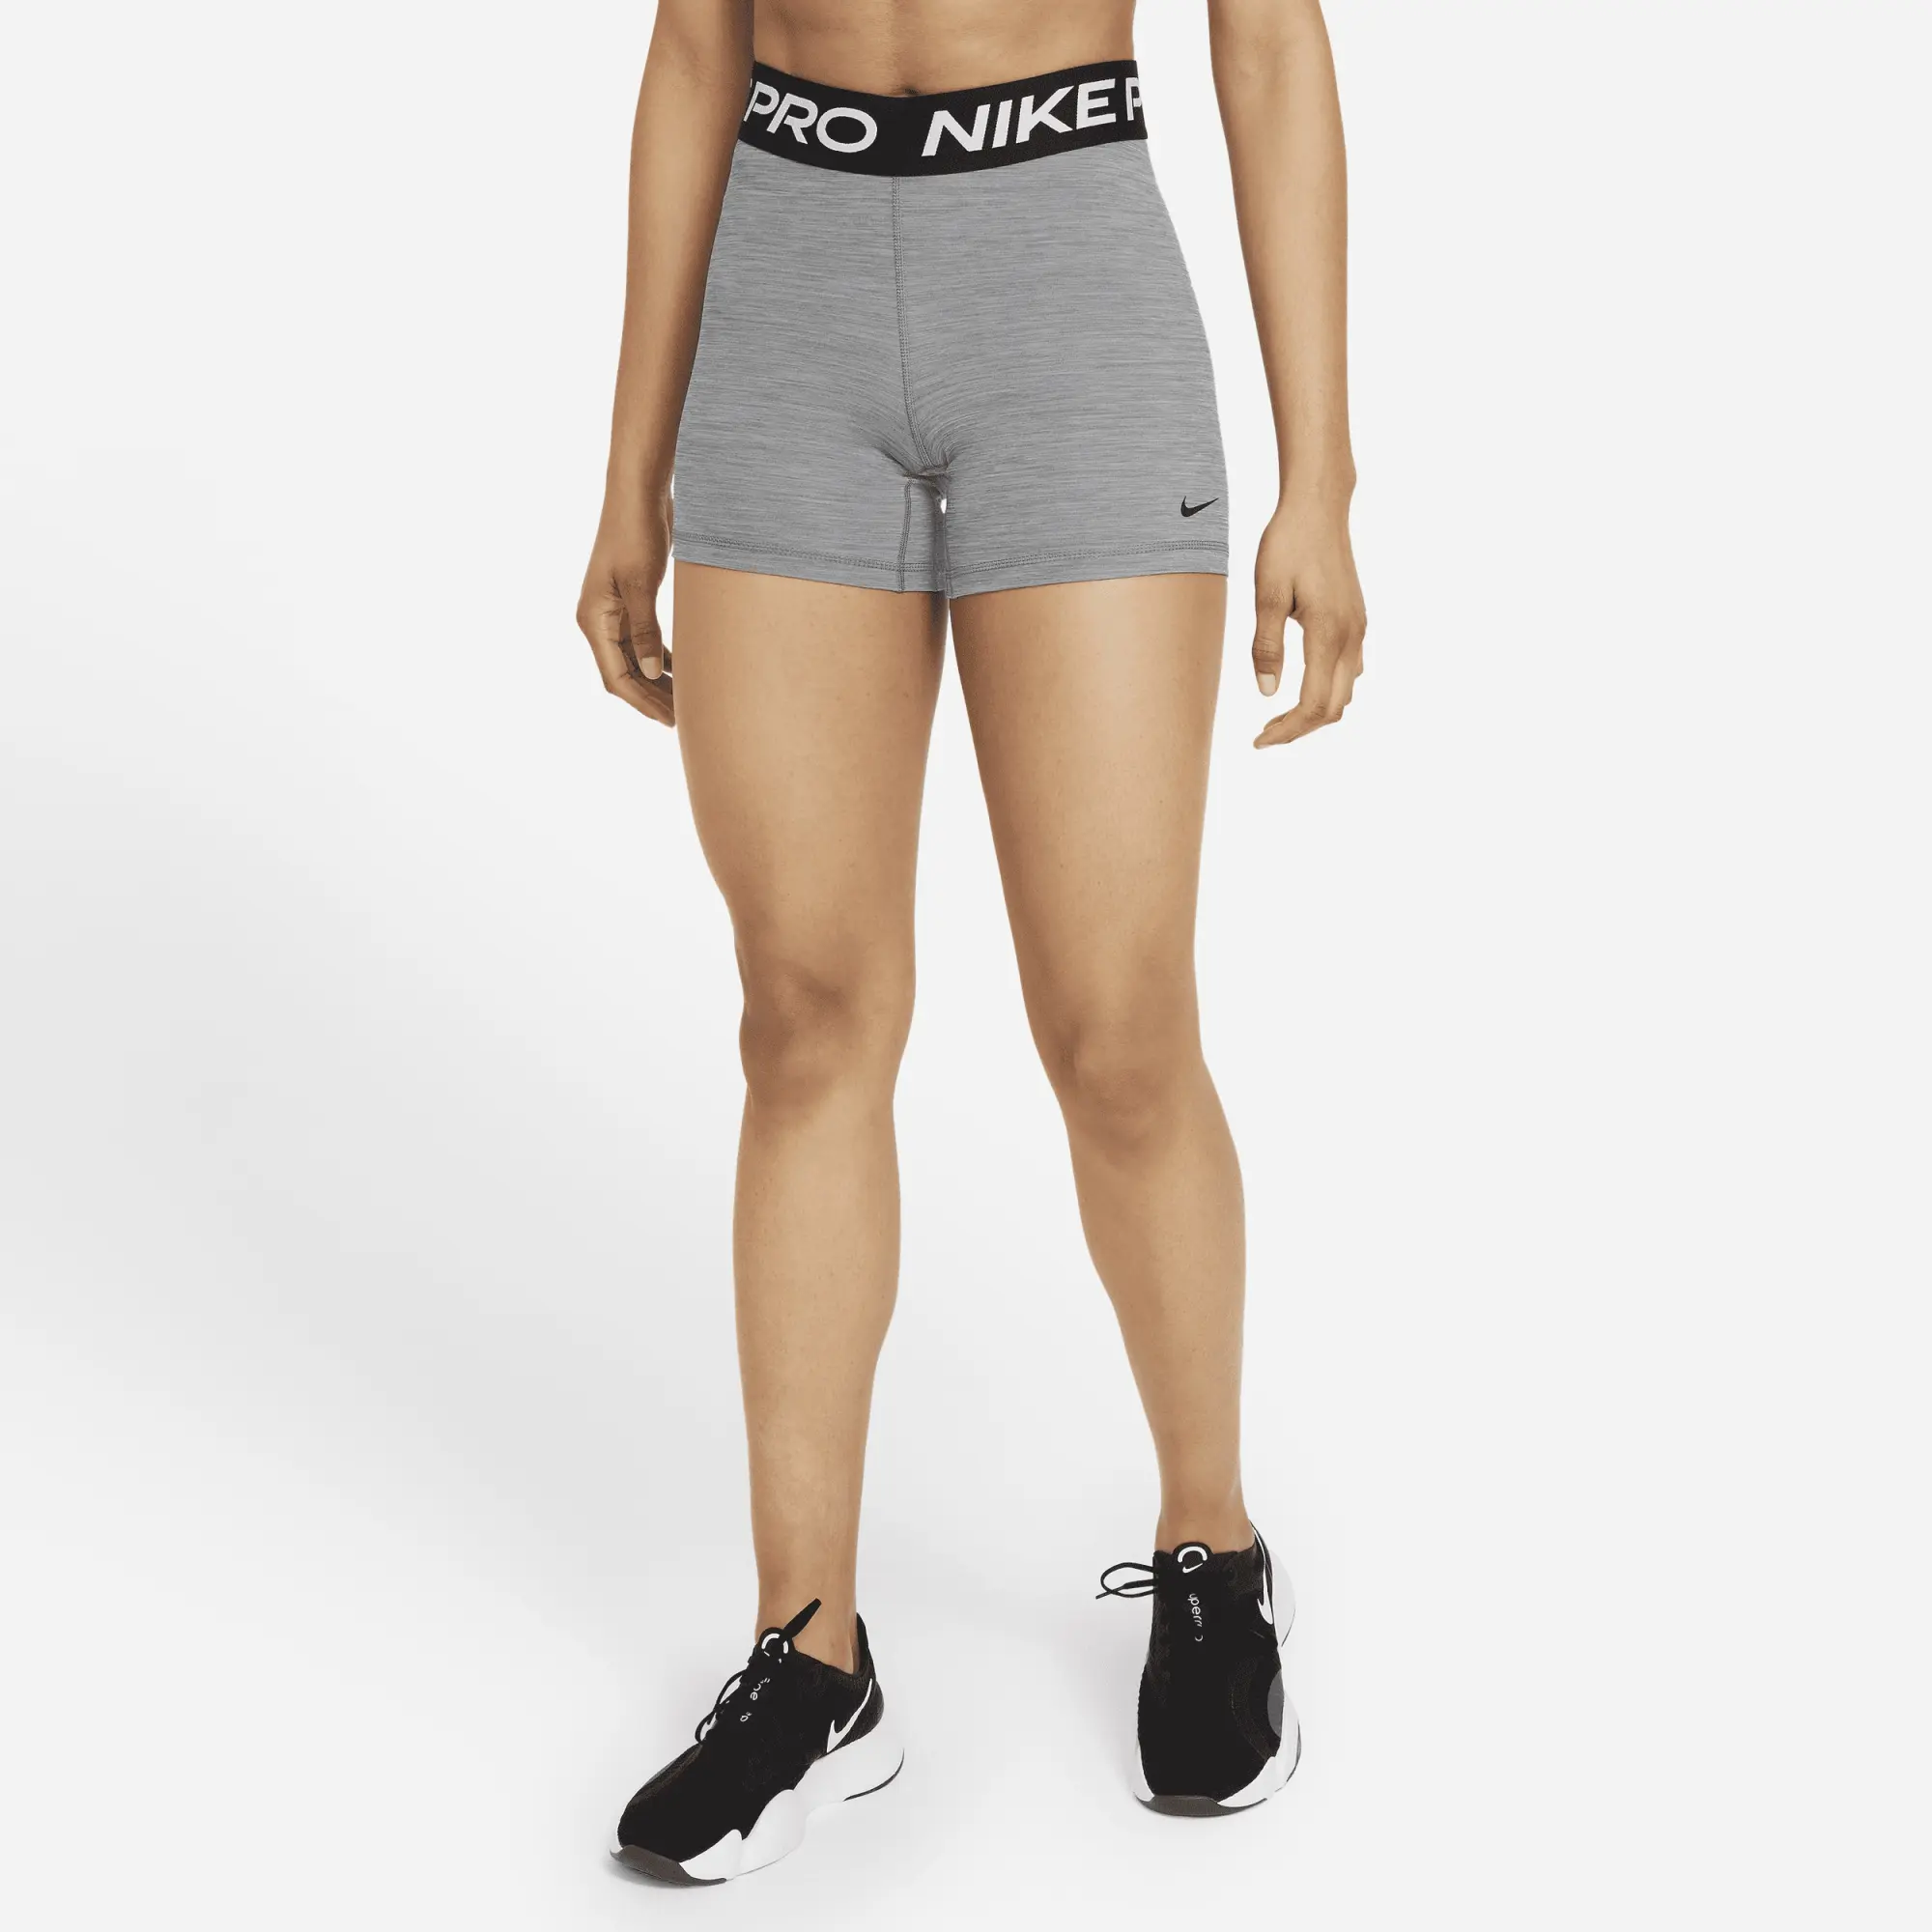 Nike Pro 365 Women's 13cm (approx.) Shorts - Grey